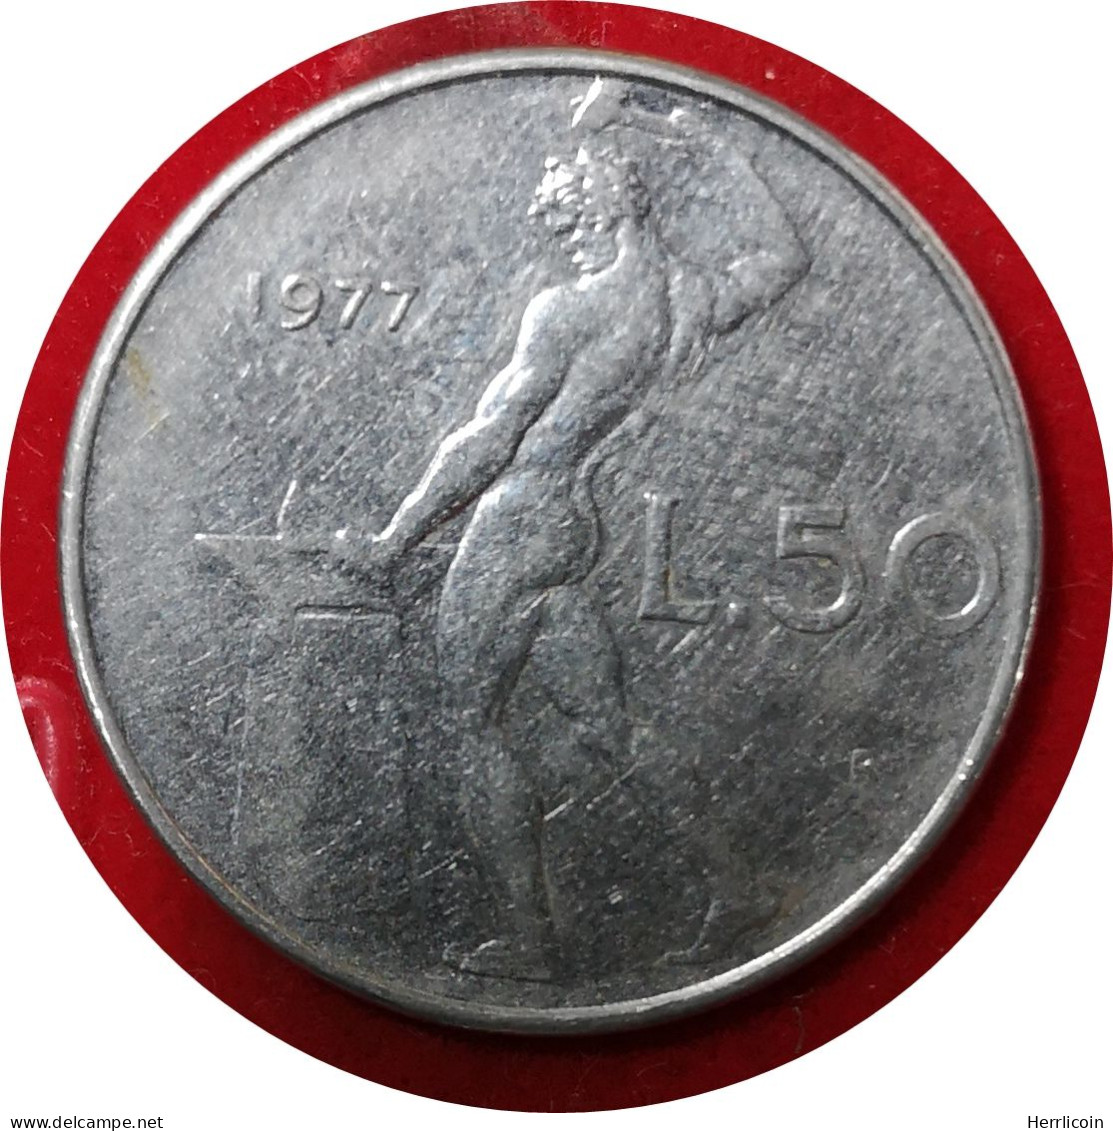 Monnaie Italie - 1977 - 50 Lire Grand Module - 50 Liras